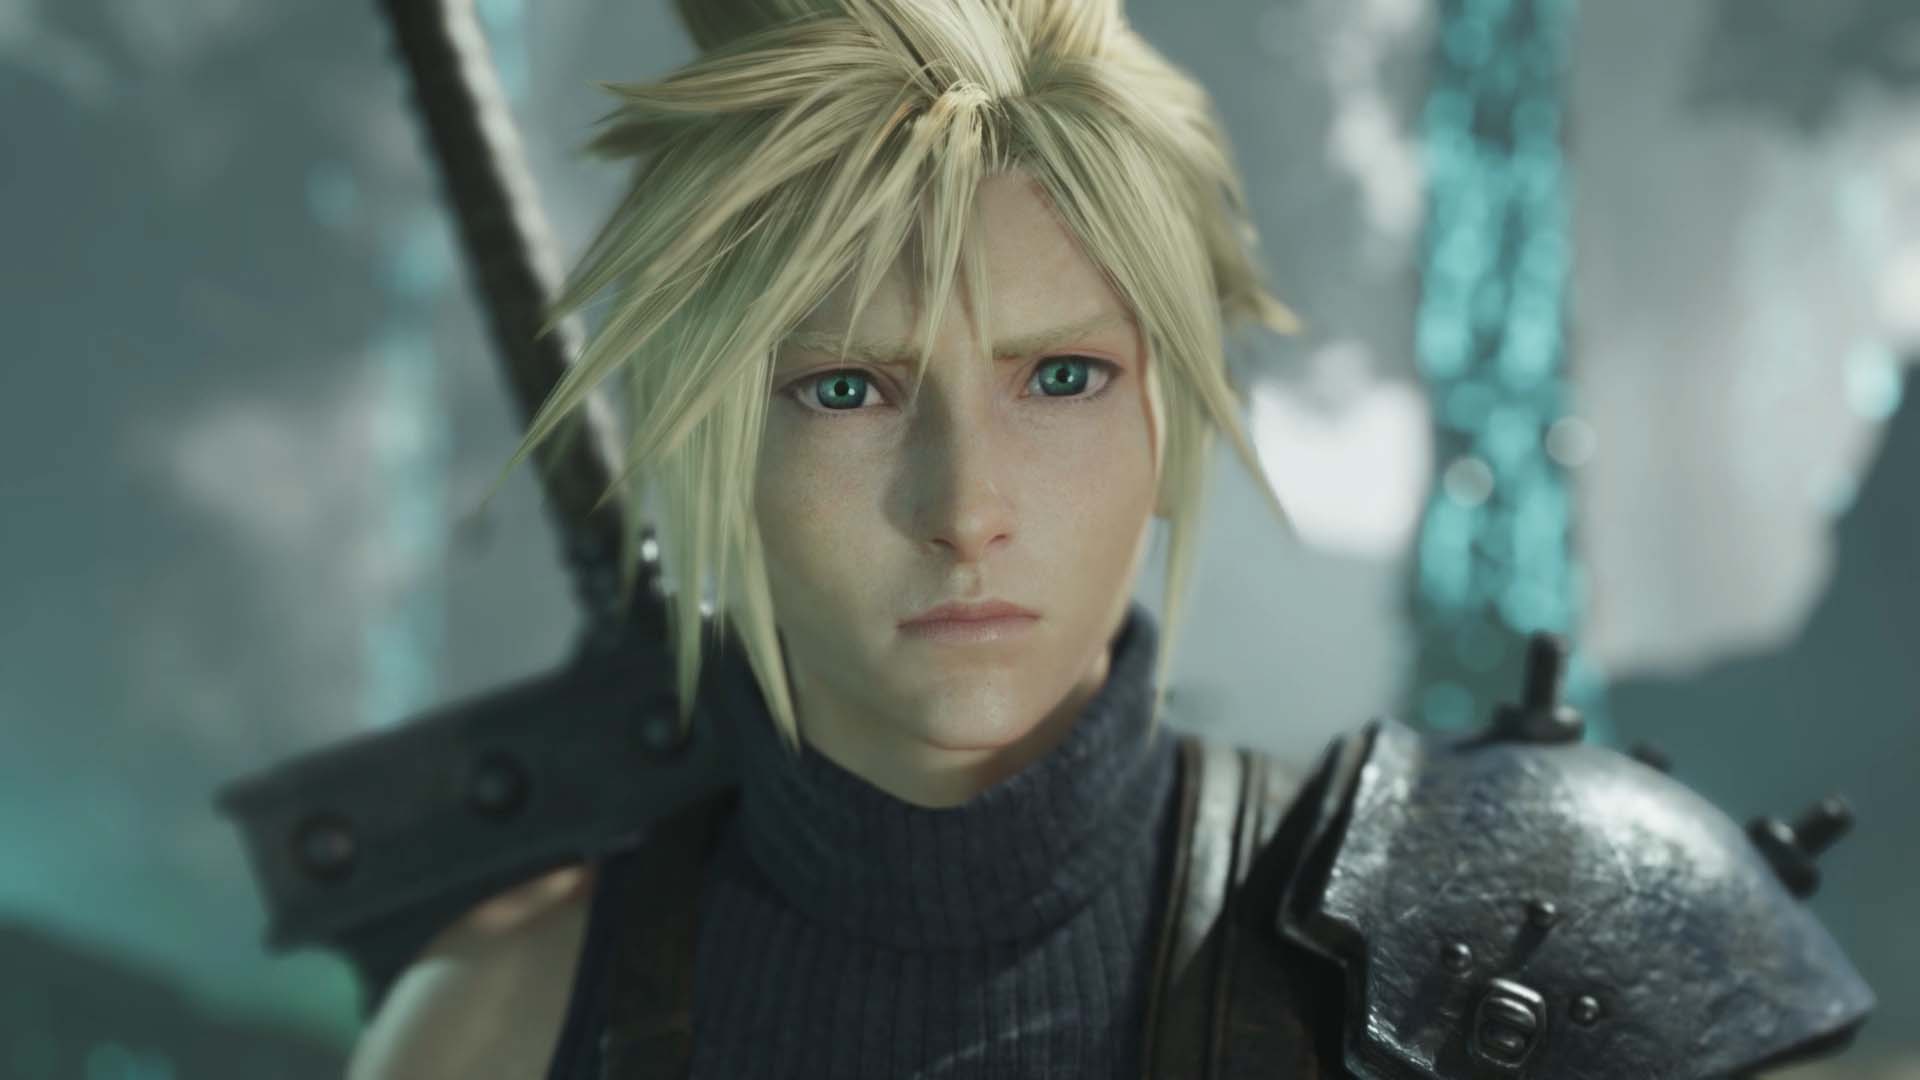 A screenshot of Cloud from Final Fantasy VII Rebirth.